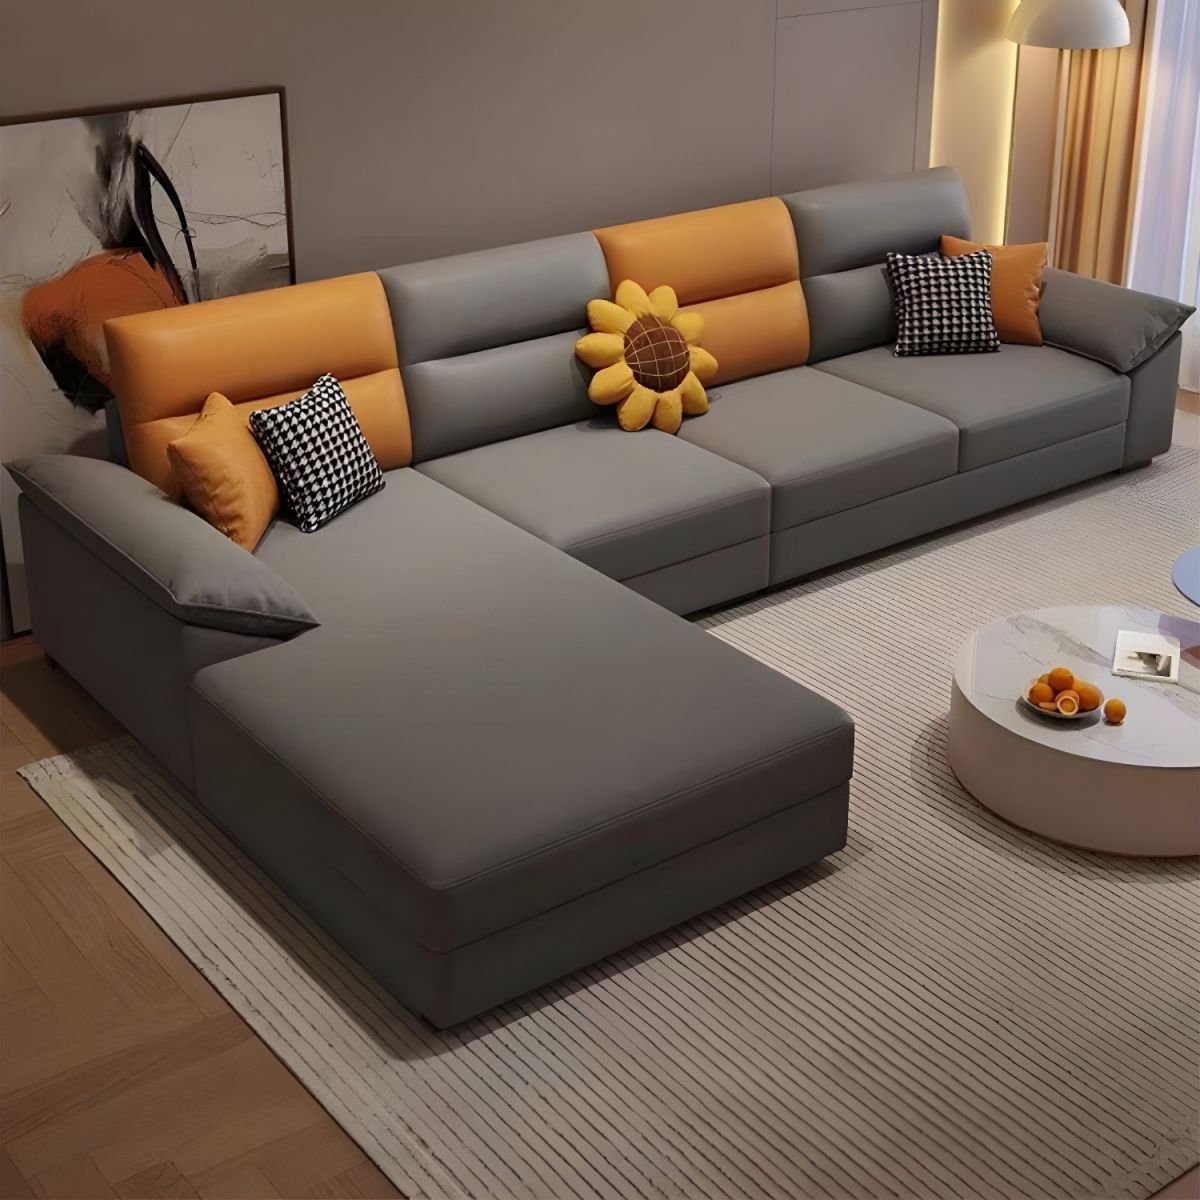 Scandinavian Wood Seats 4 Large (Over 109 in.) Pillow Top Arm Sofa Chaise - Tech Cloth Dark Gray/ Orange Left